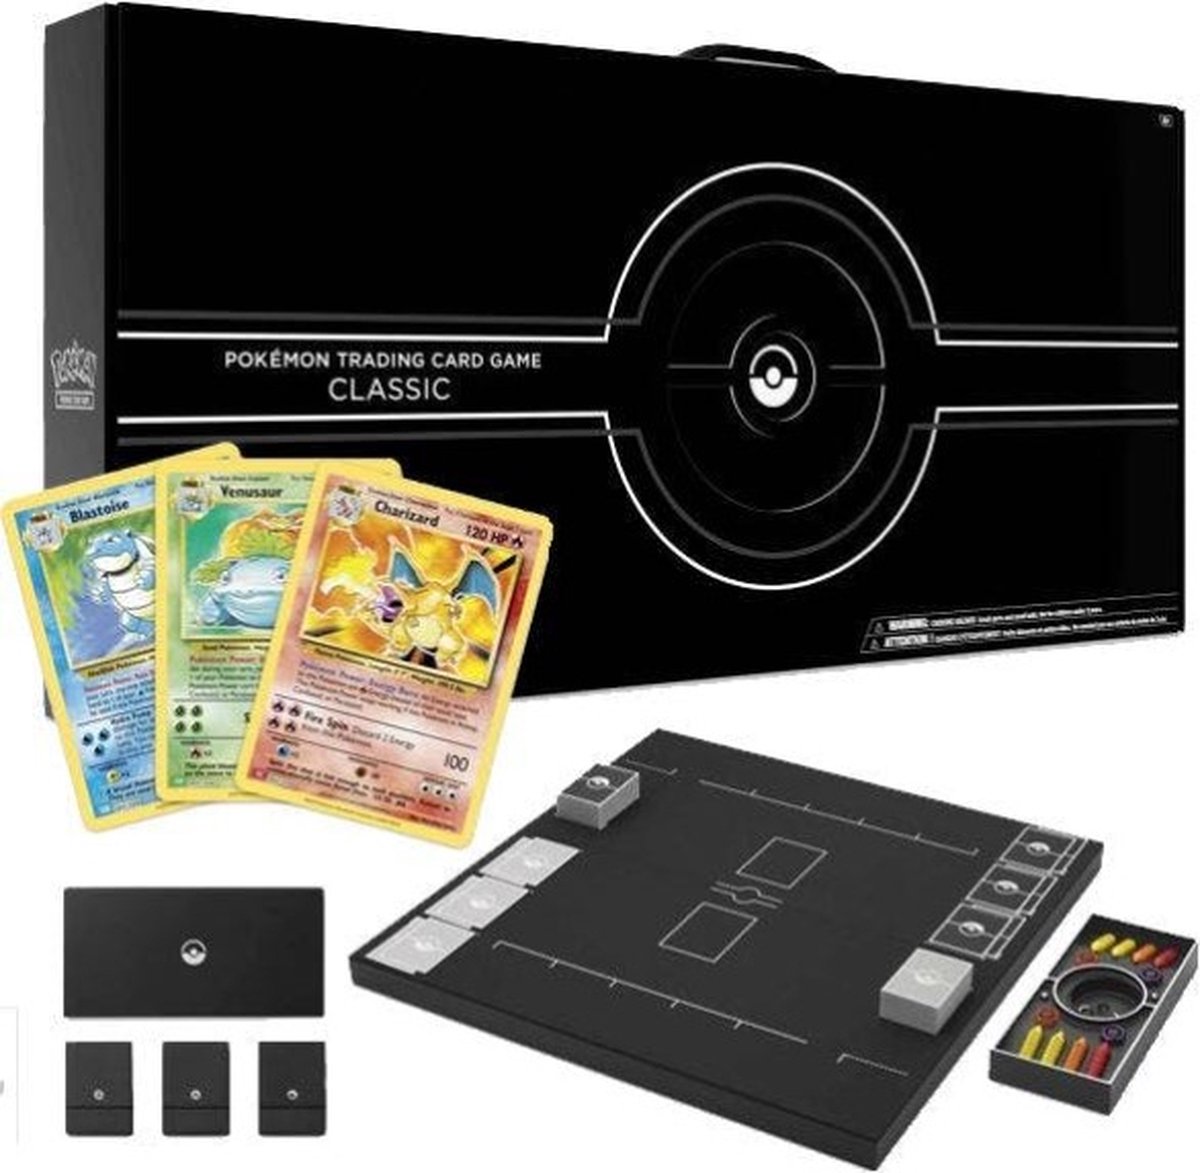 Pokémon Trading Card Game Classic - Exclusiefste Box Ooit Uitgebracht